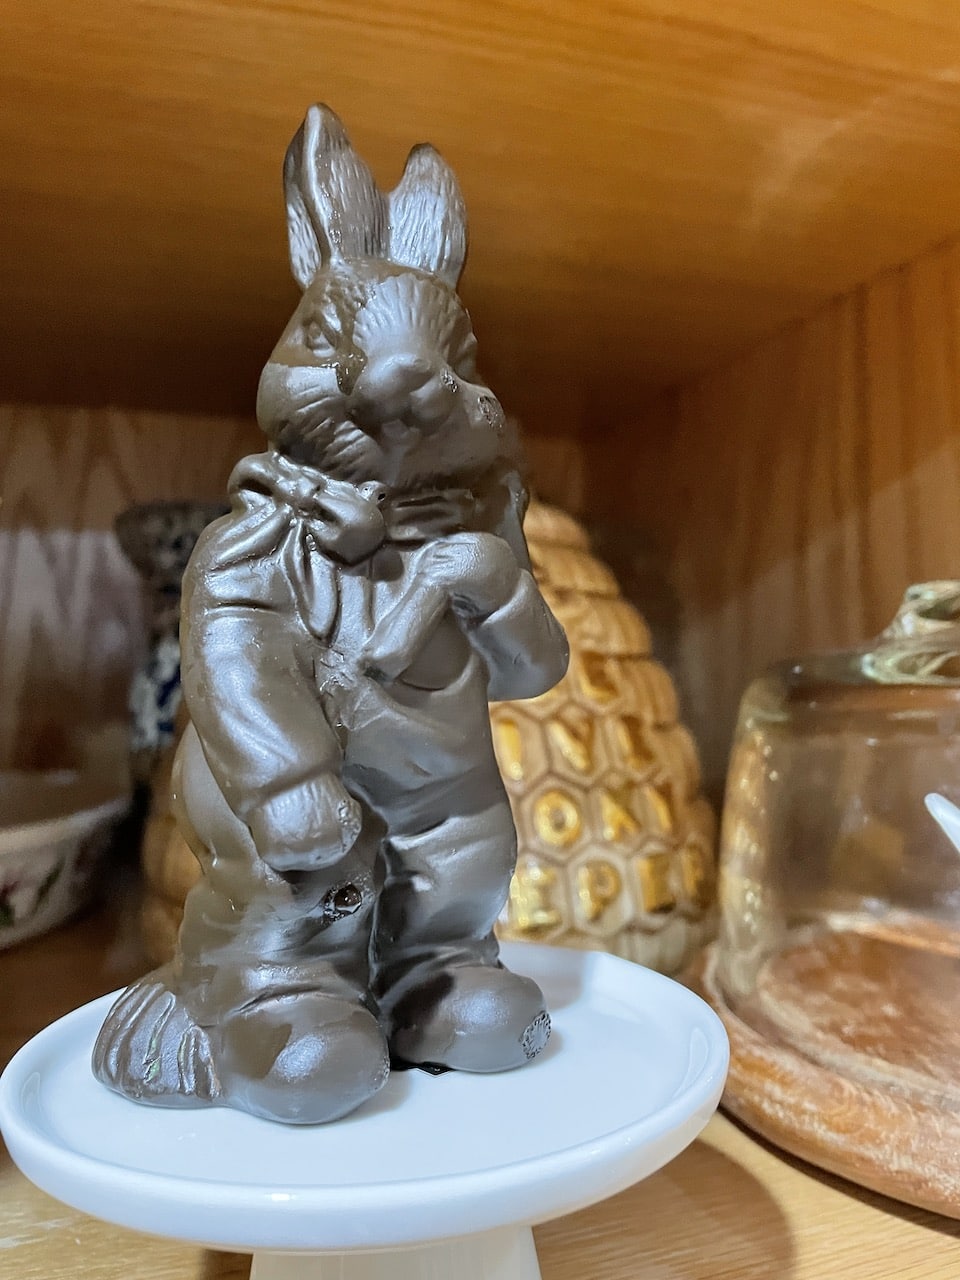 Big choc bunny Chocolate Thrift Store Bunnies